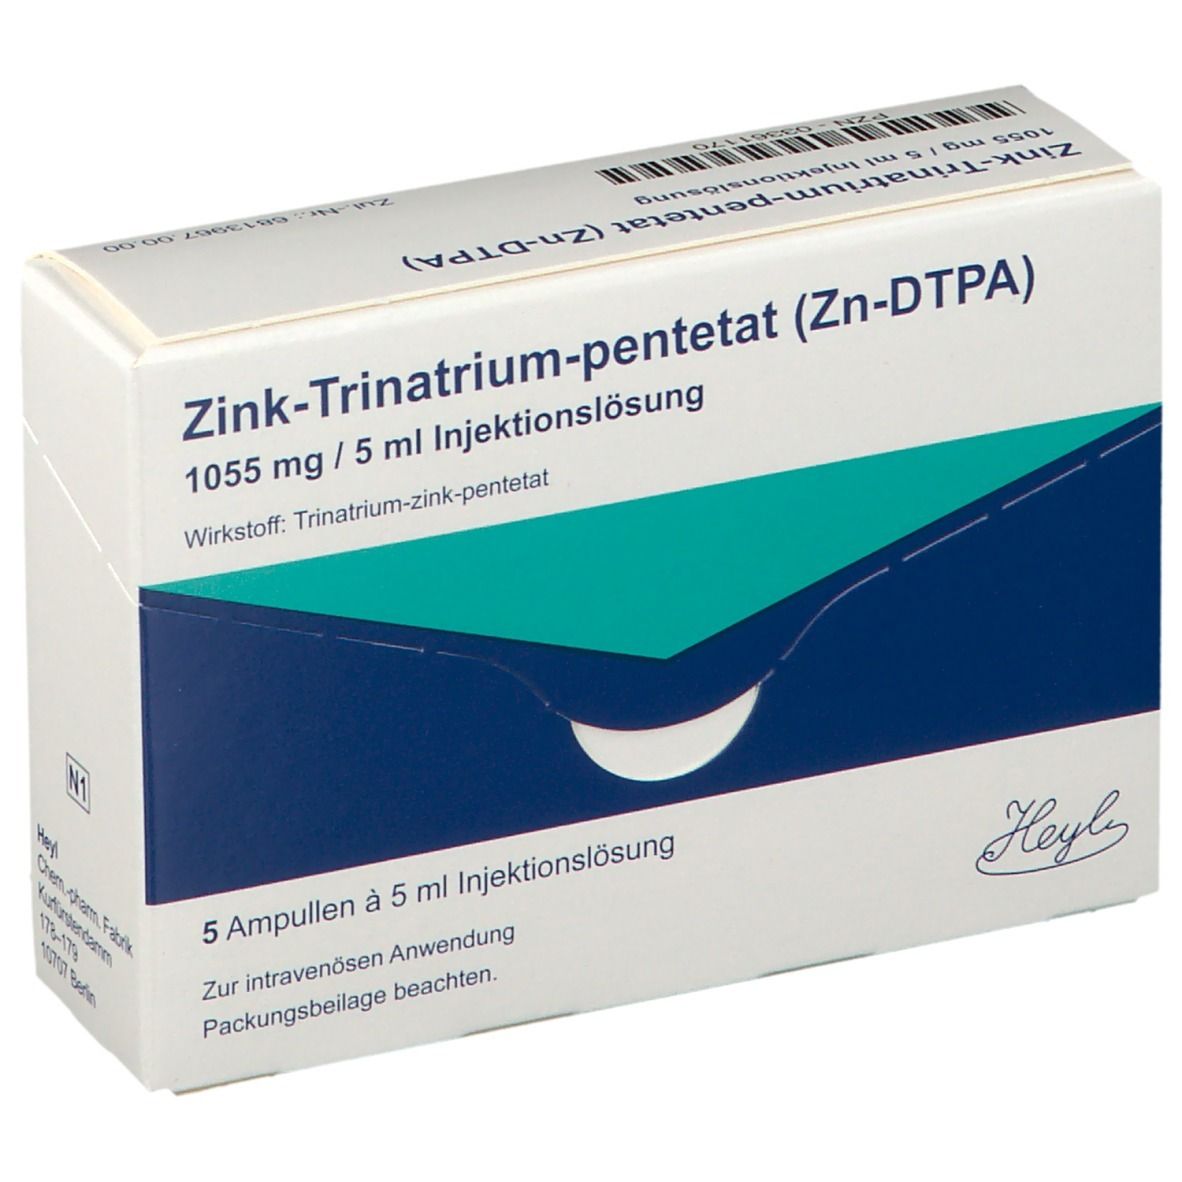 Zink-Trinatrium-pentetat